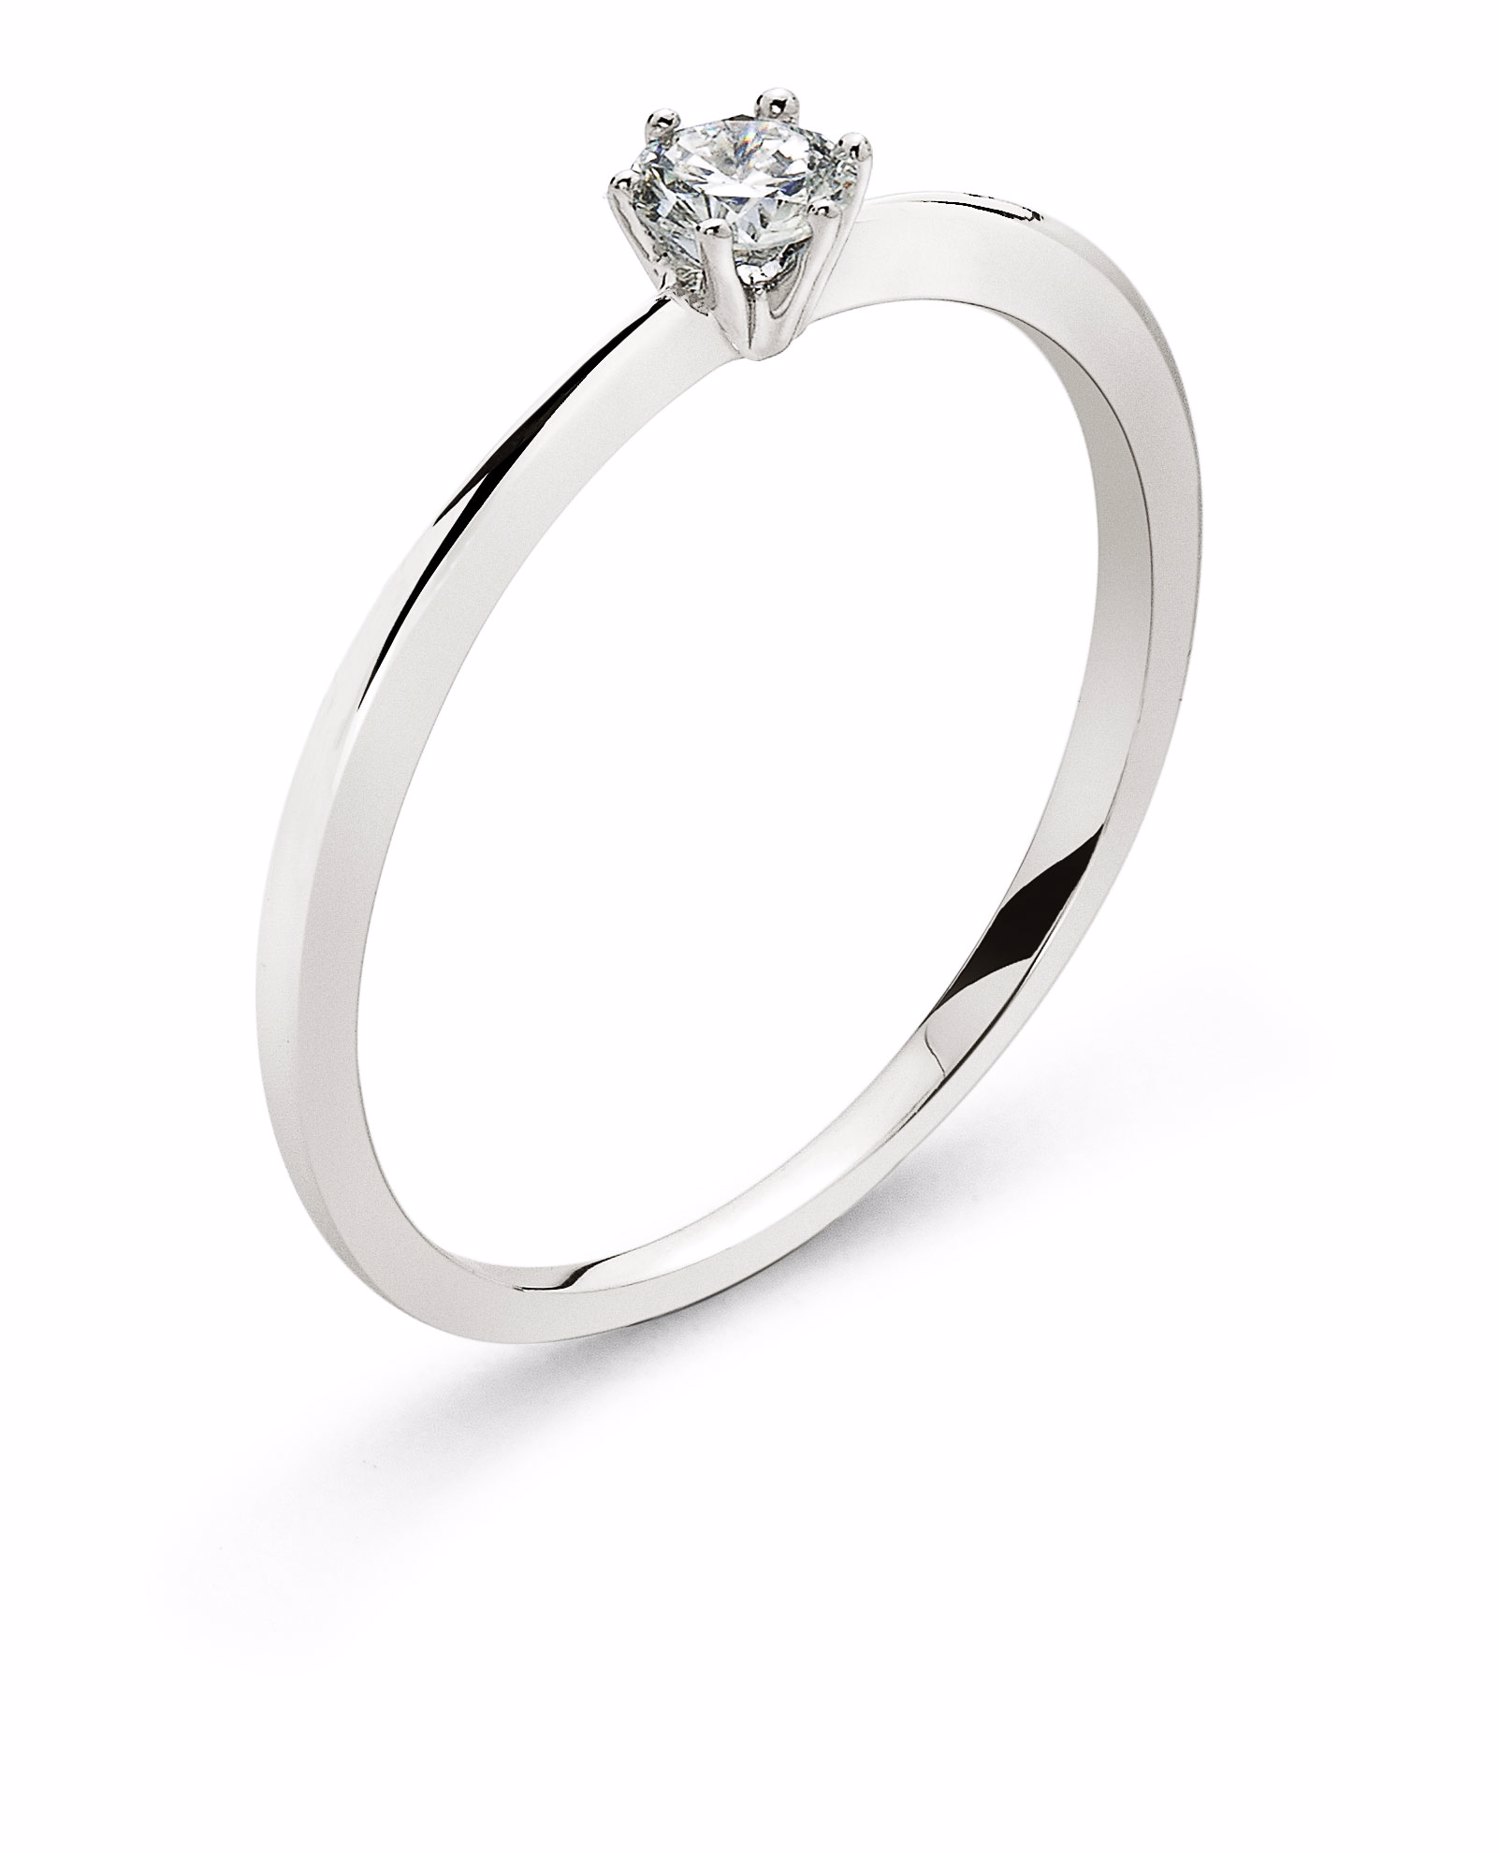 AURONOS Prestige Solitaire Ring White Gold 18K Diamond 0.15ct